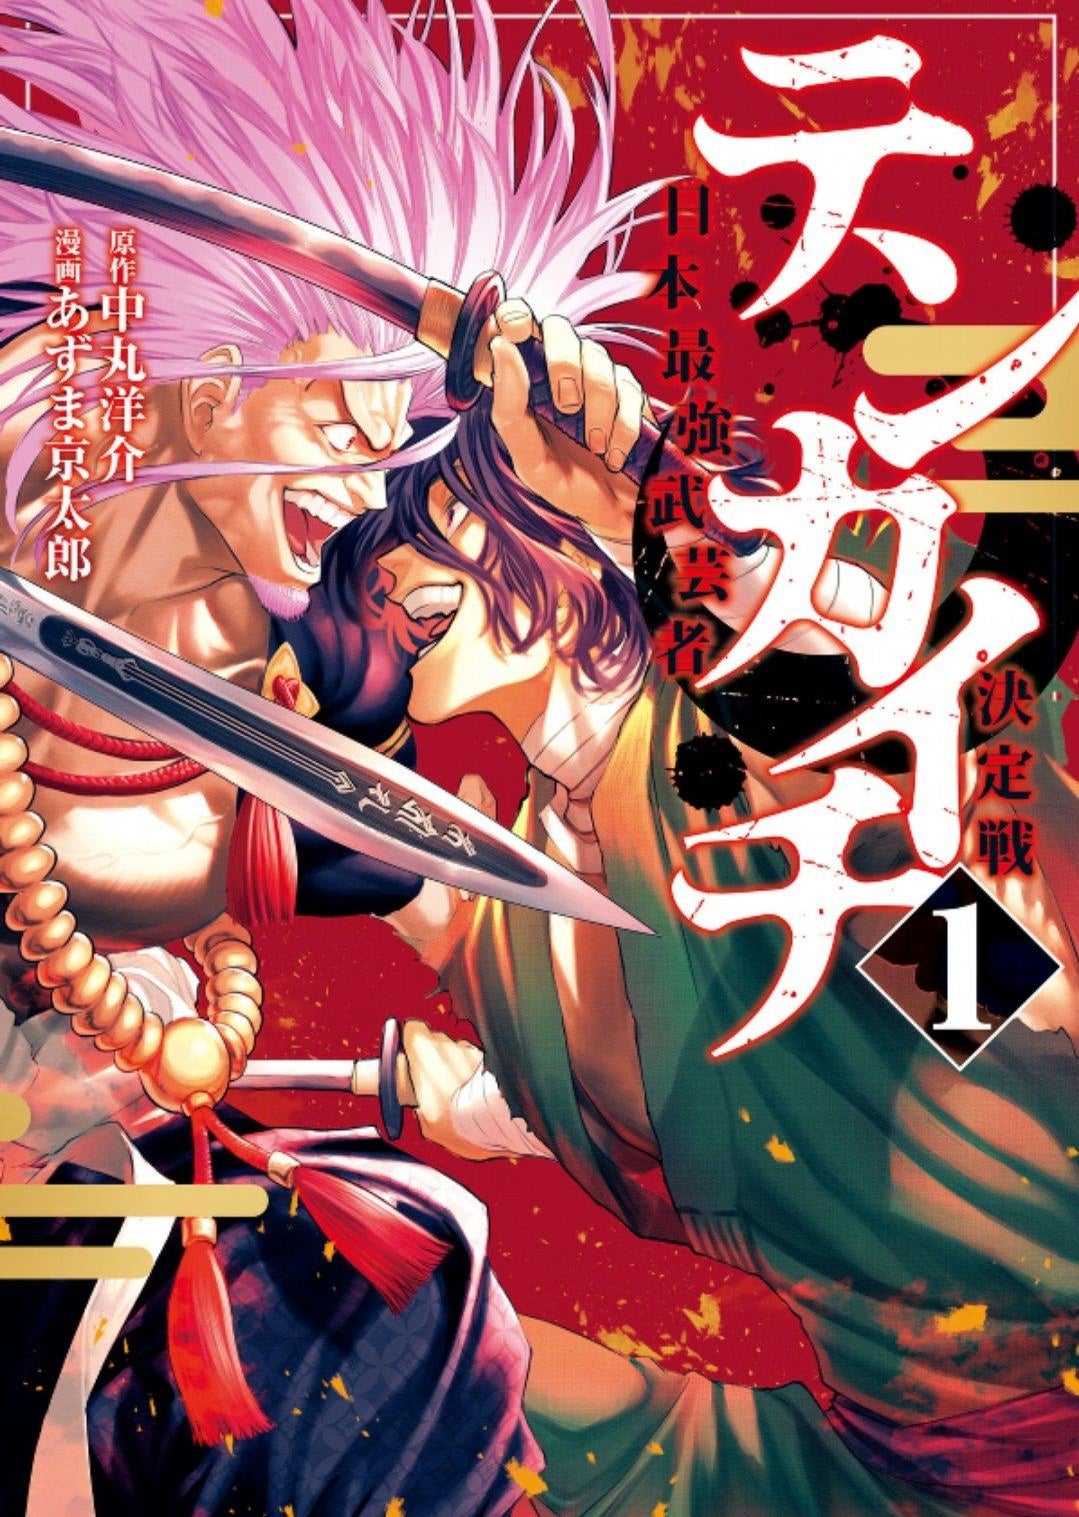 Manga Mogura RE on X: The upcoming Sequel Anime Movie of